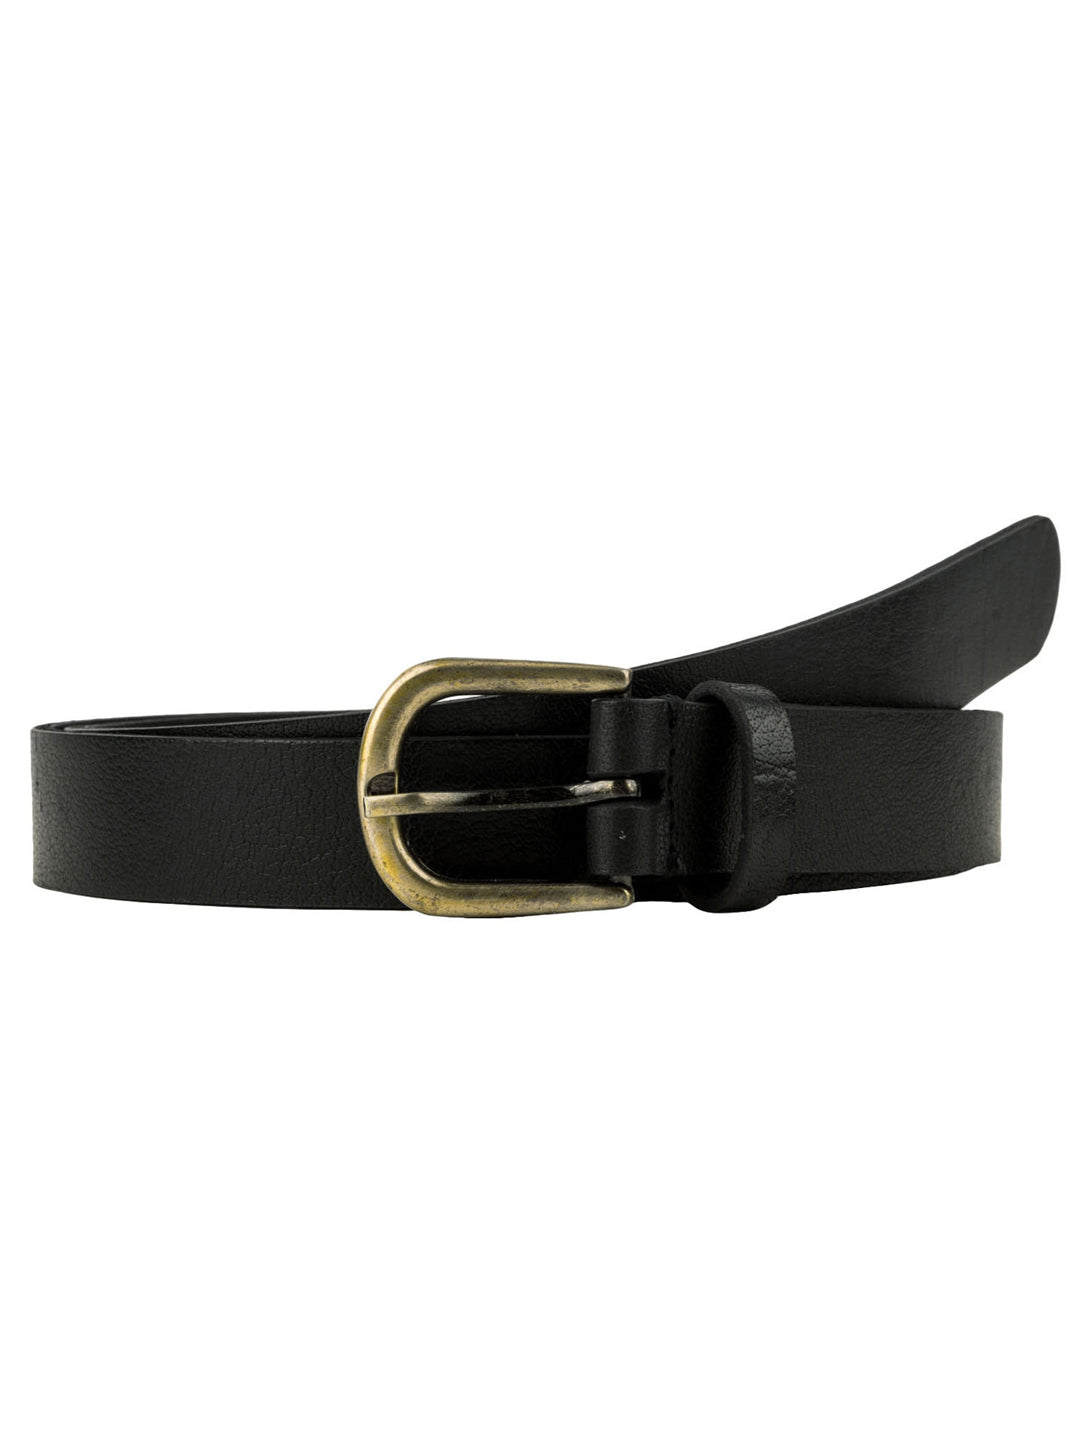 Genuine leather textured black belt Aditi Wasan